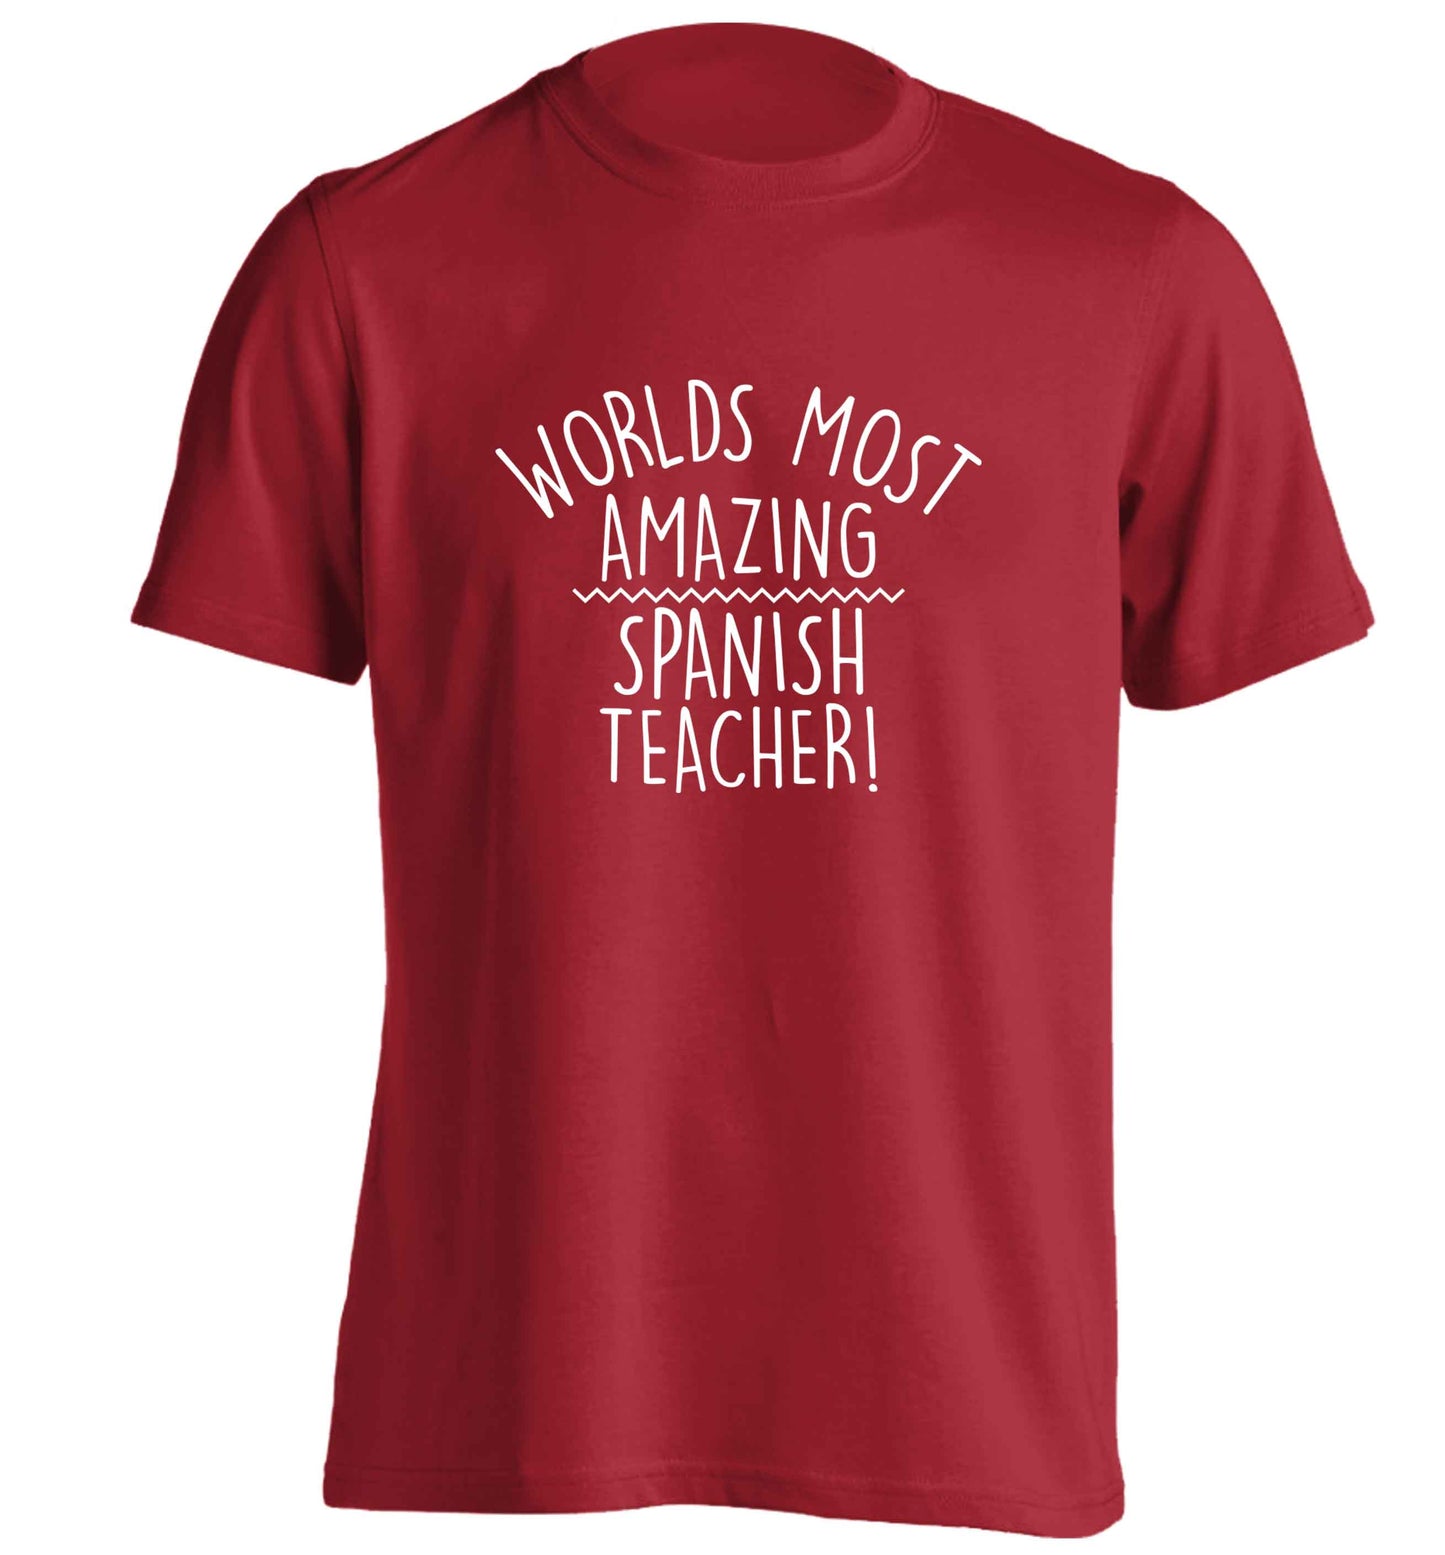 Worlds most amazing Spanish teacher adults unisex red Tshirt 2XL